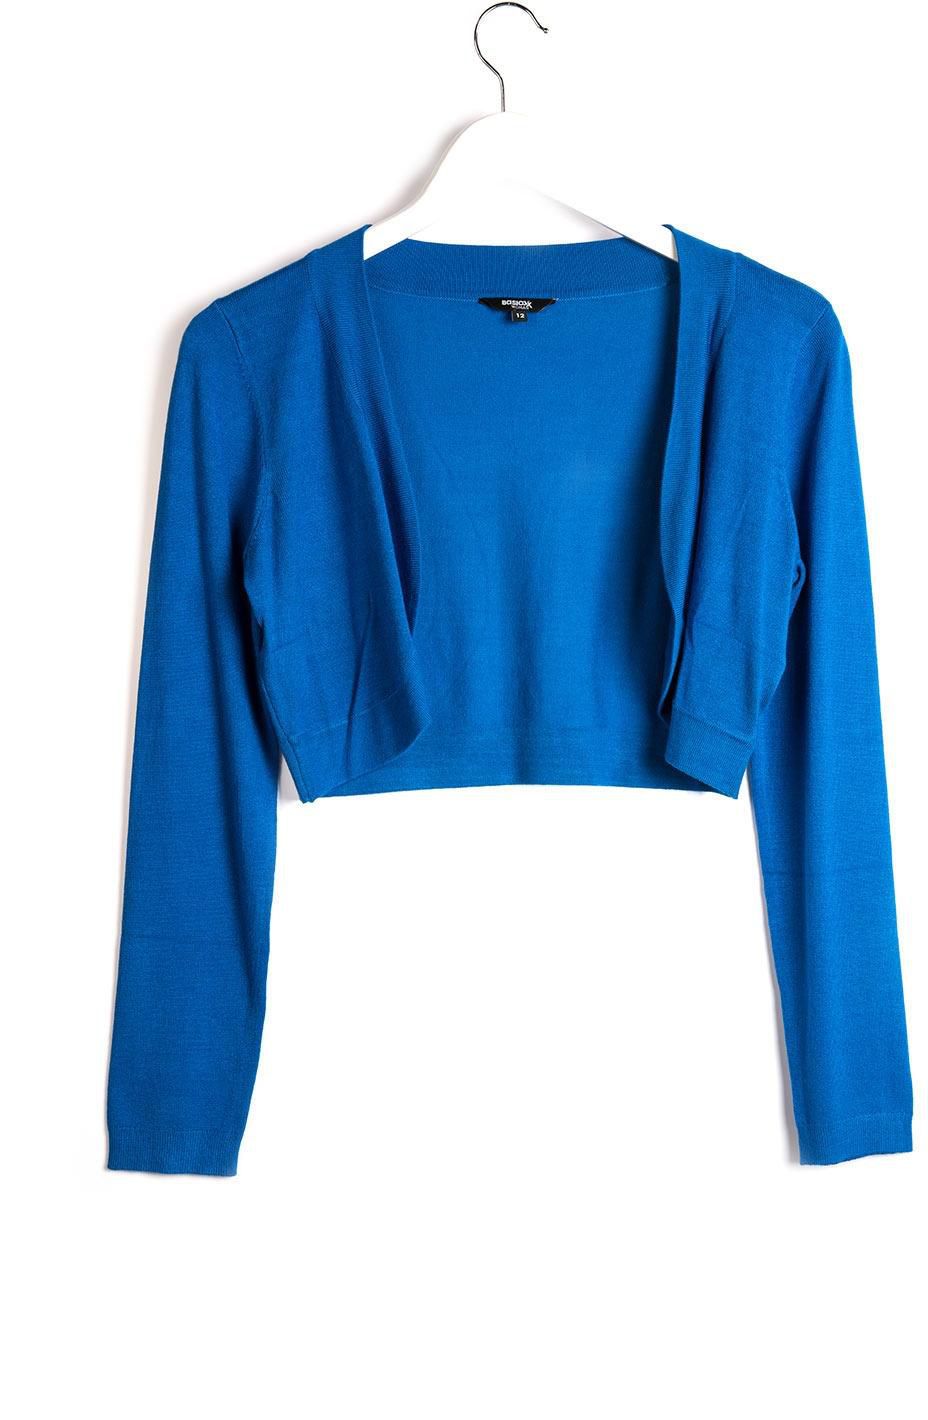 Basicxx Sweater Knit Shrug Long Sleeve Cropped for Ladies Size 14 Blue